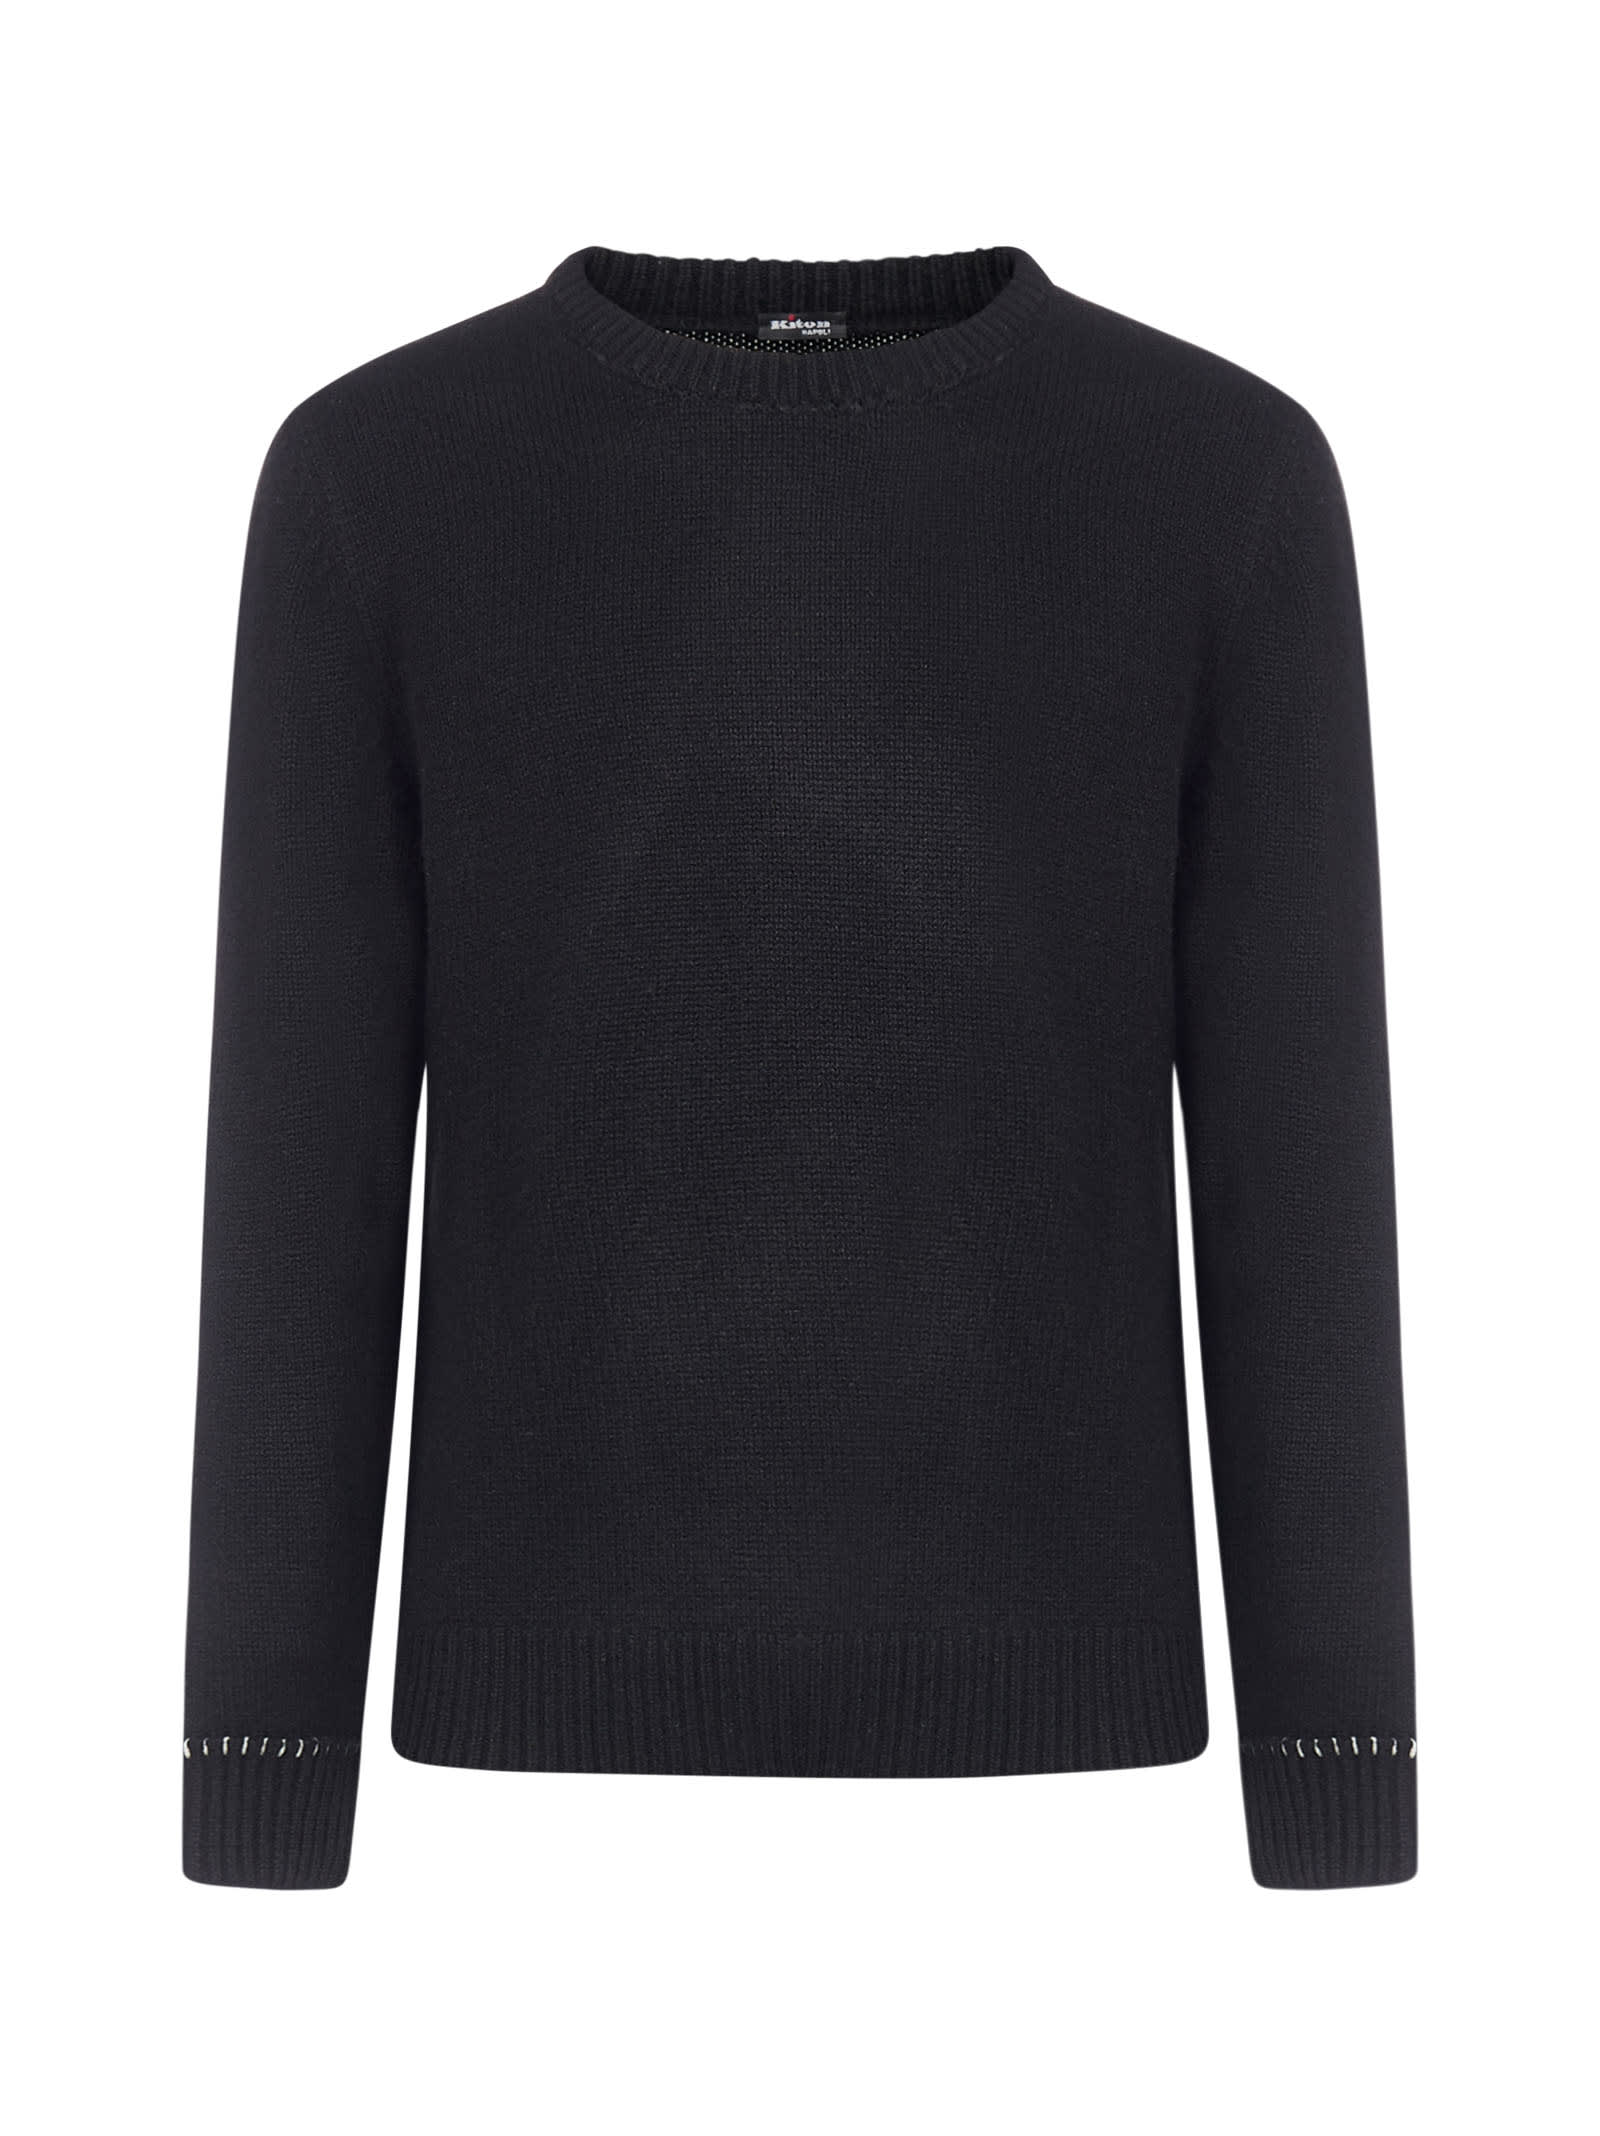 Kiton Logo Cashmere Sweater In Black Ice Grey